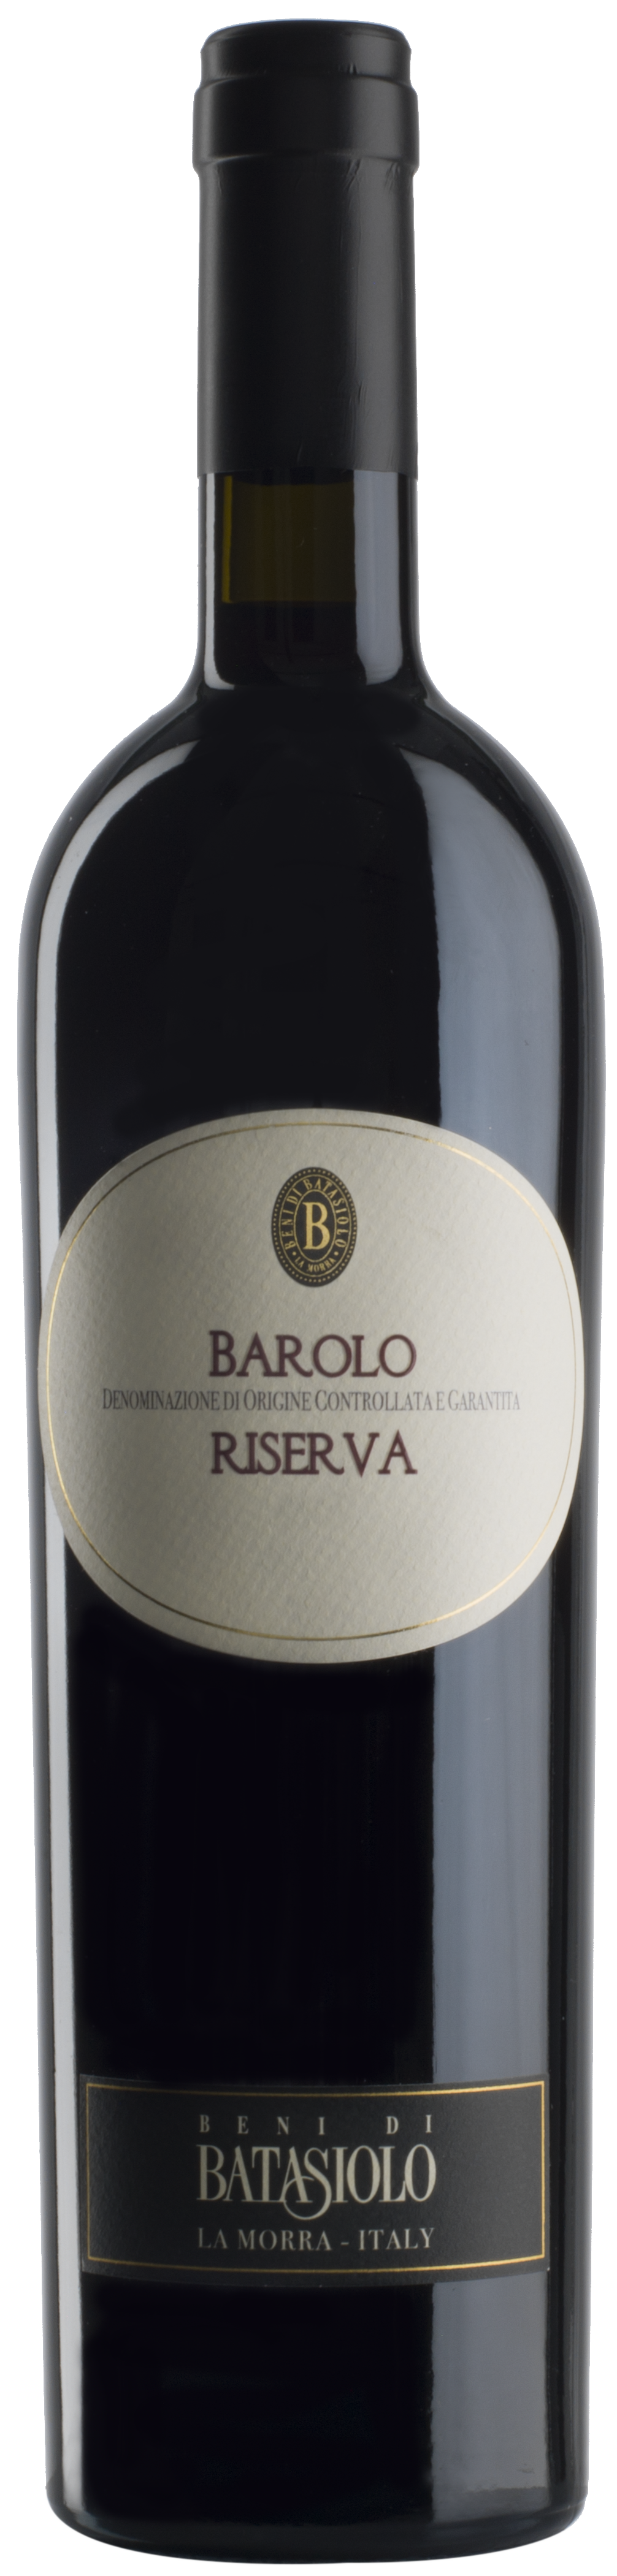 Batasiolo Barolo Riserva 2013 - Piemont - Rotwein trocken - 0,75l - 14% vol.